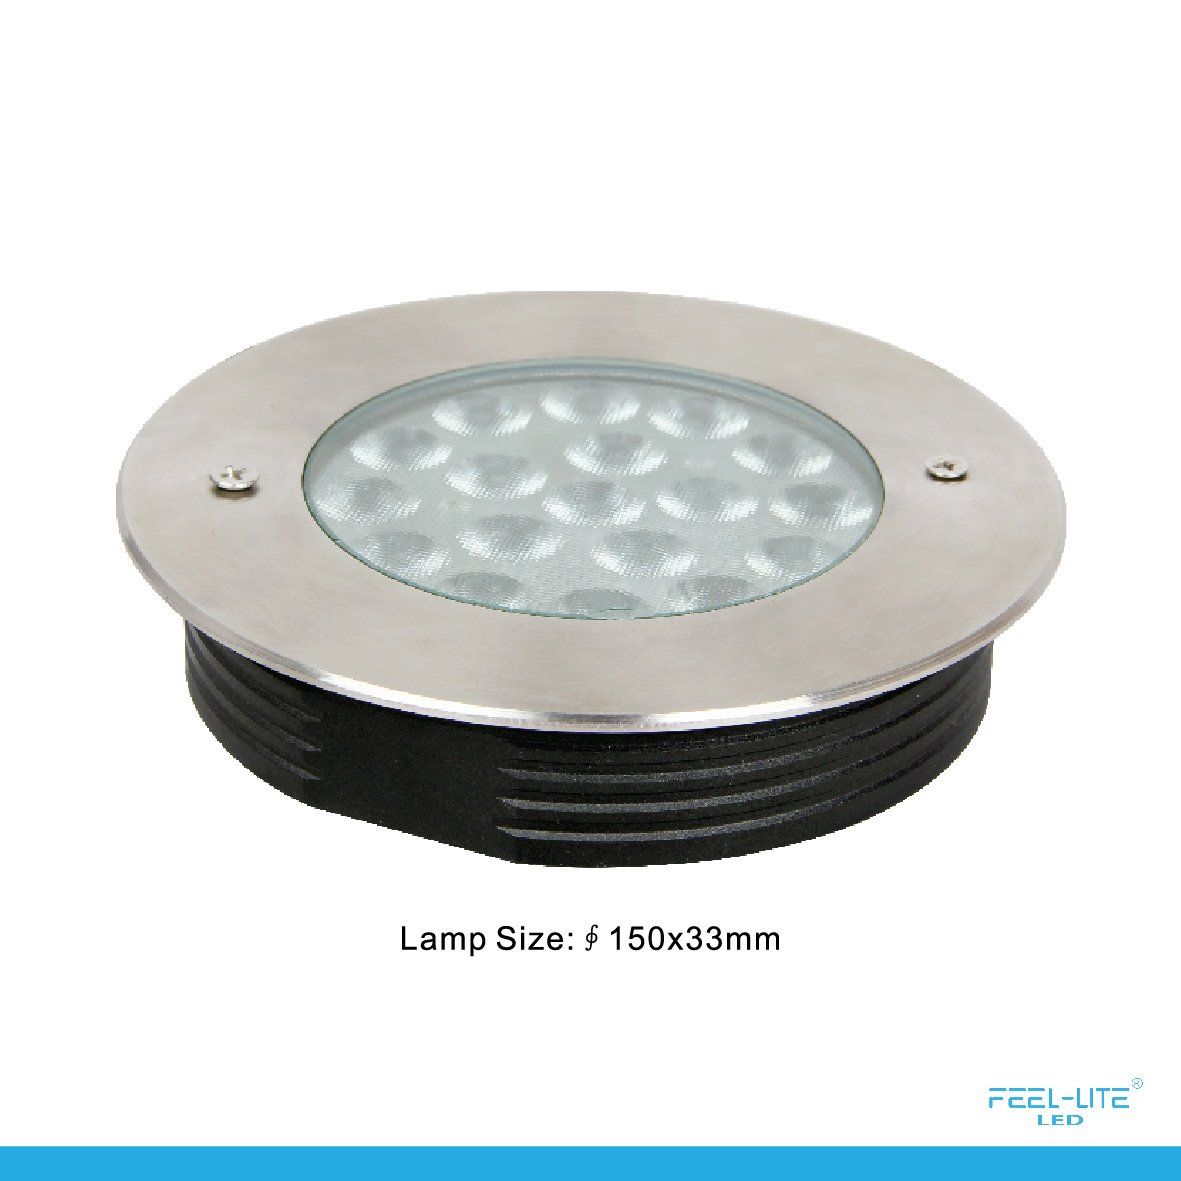 Feel-Lite LED Outdoor Light U729-15w-smd